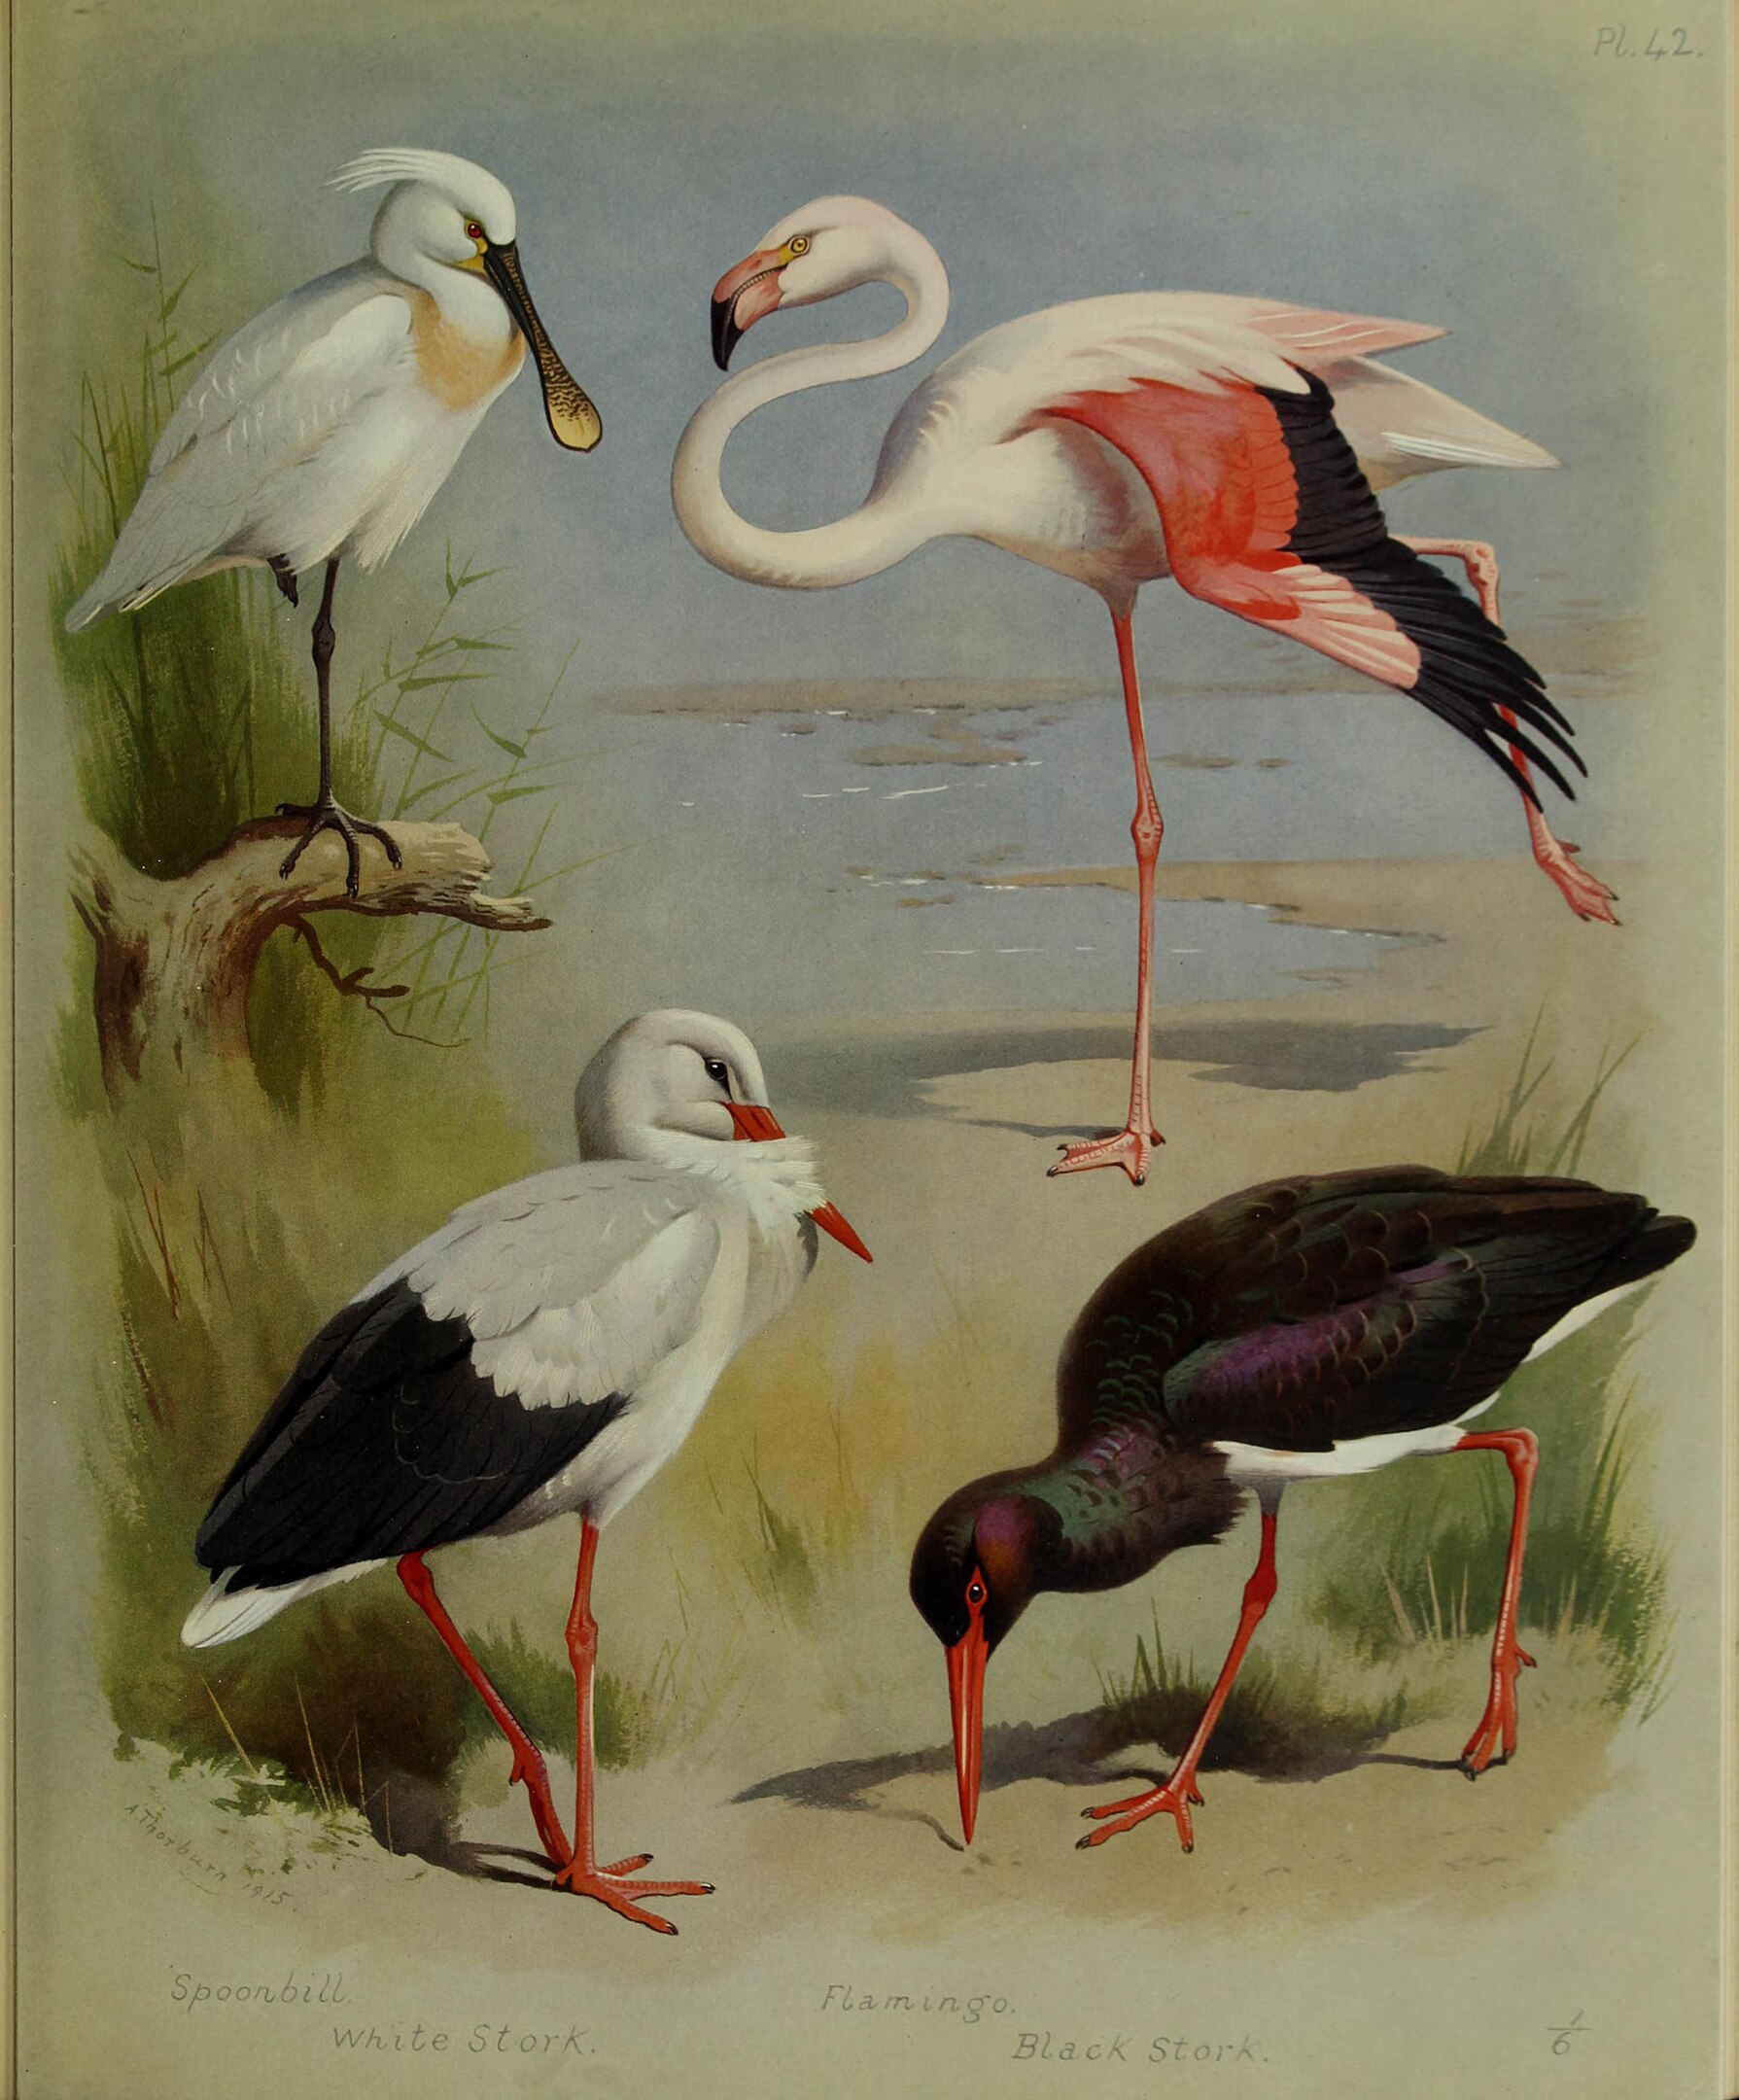 An illustration of four storks